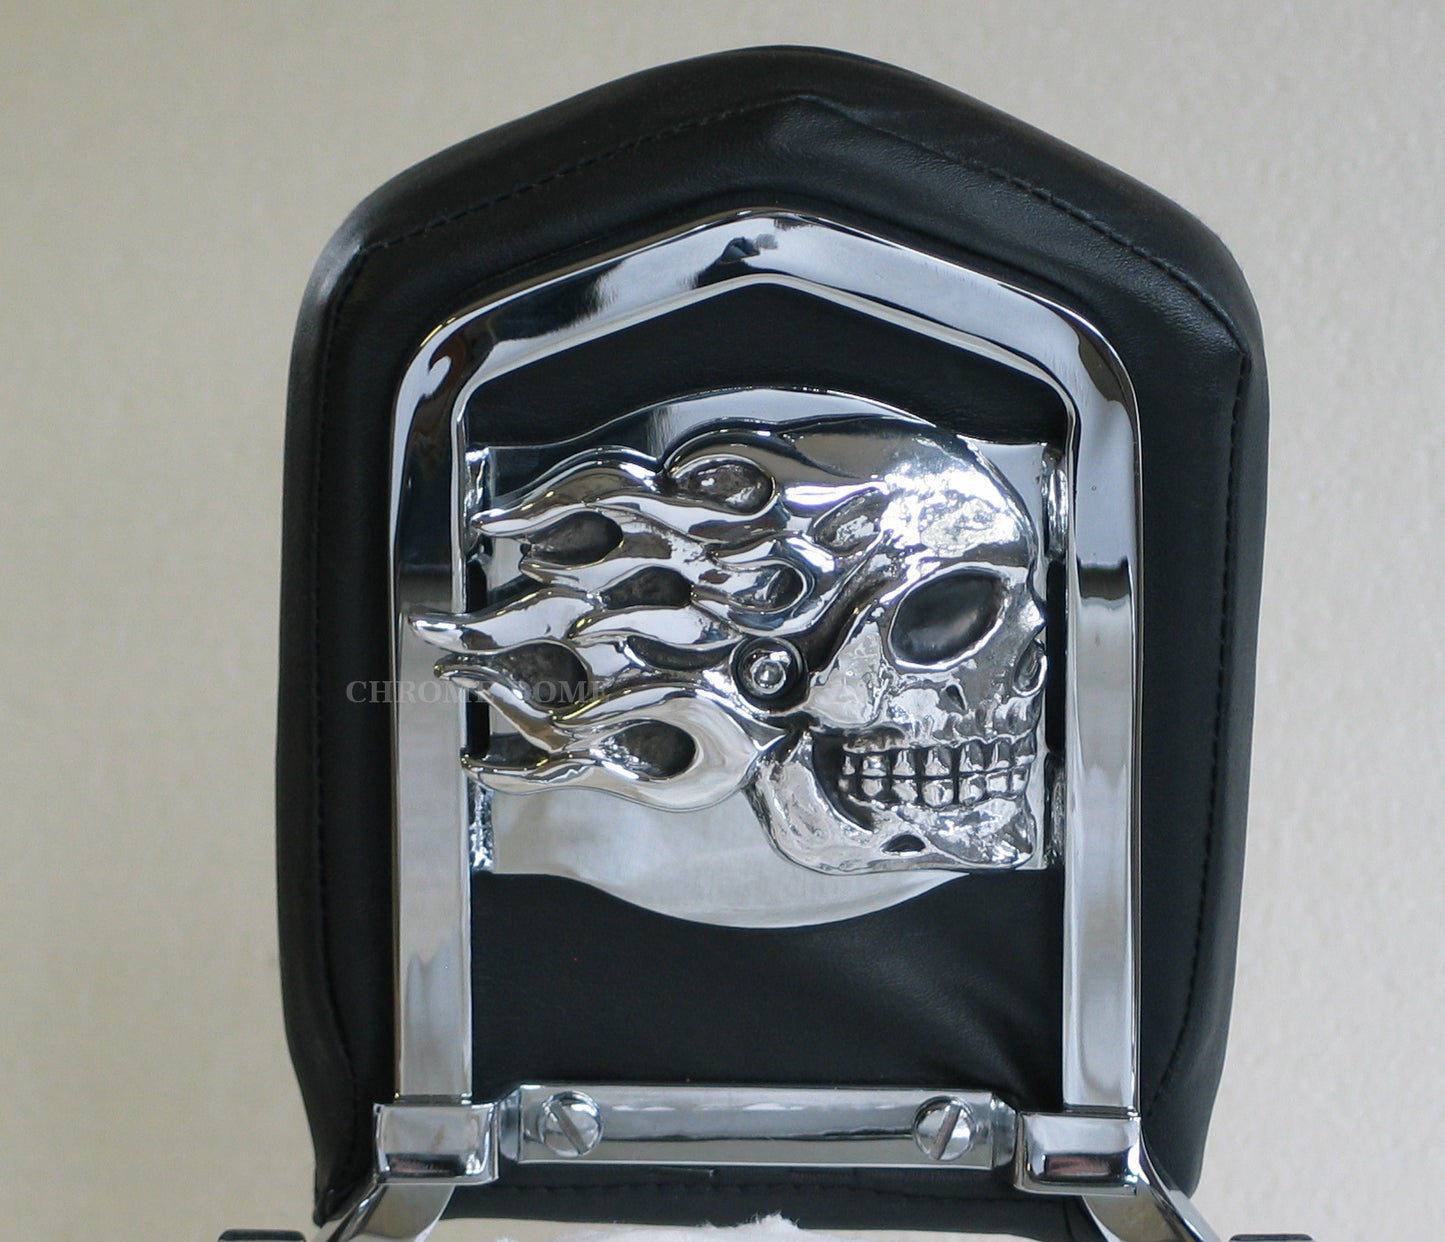 Harley Backrest Inserts - Flaming Skull